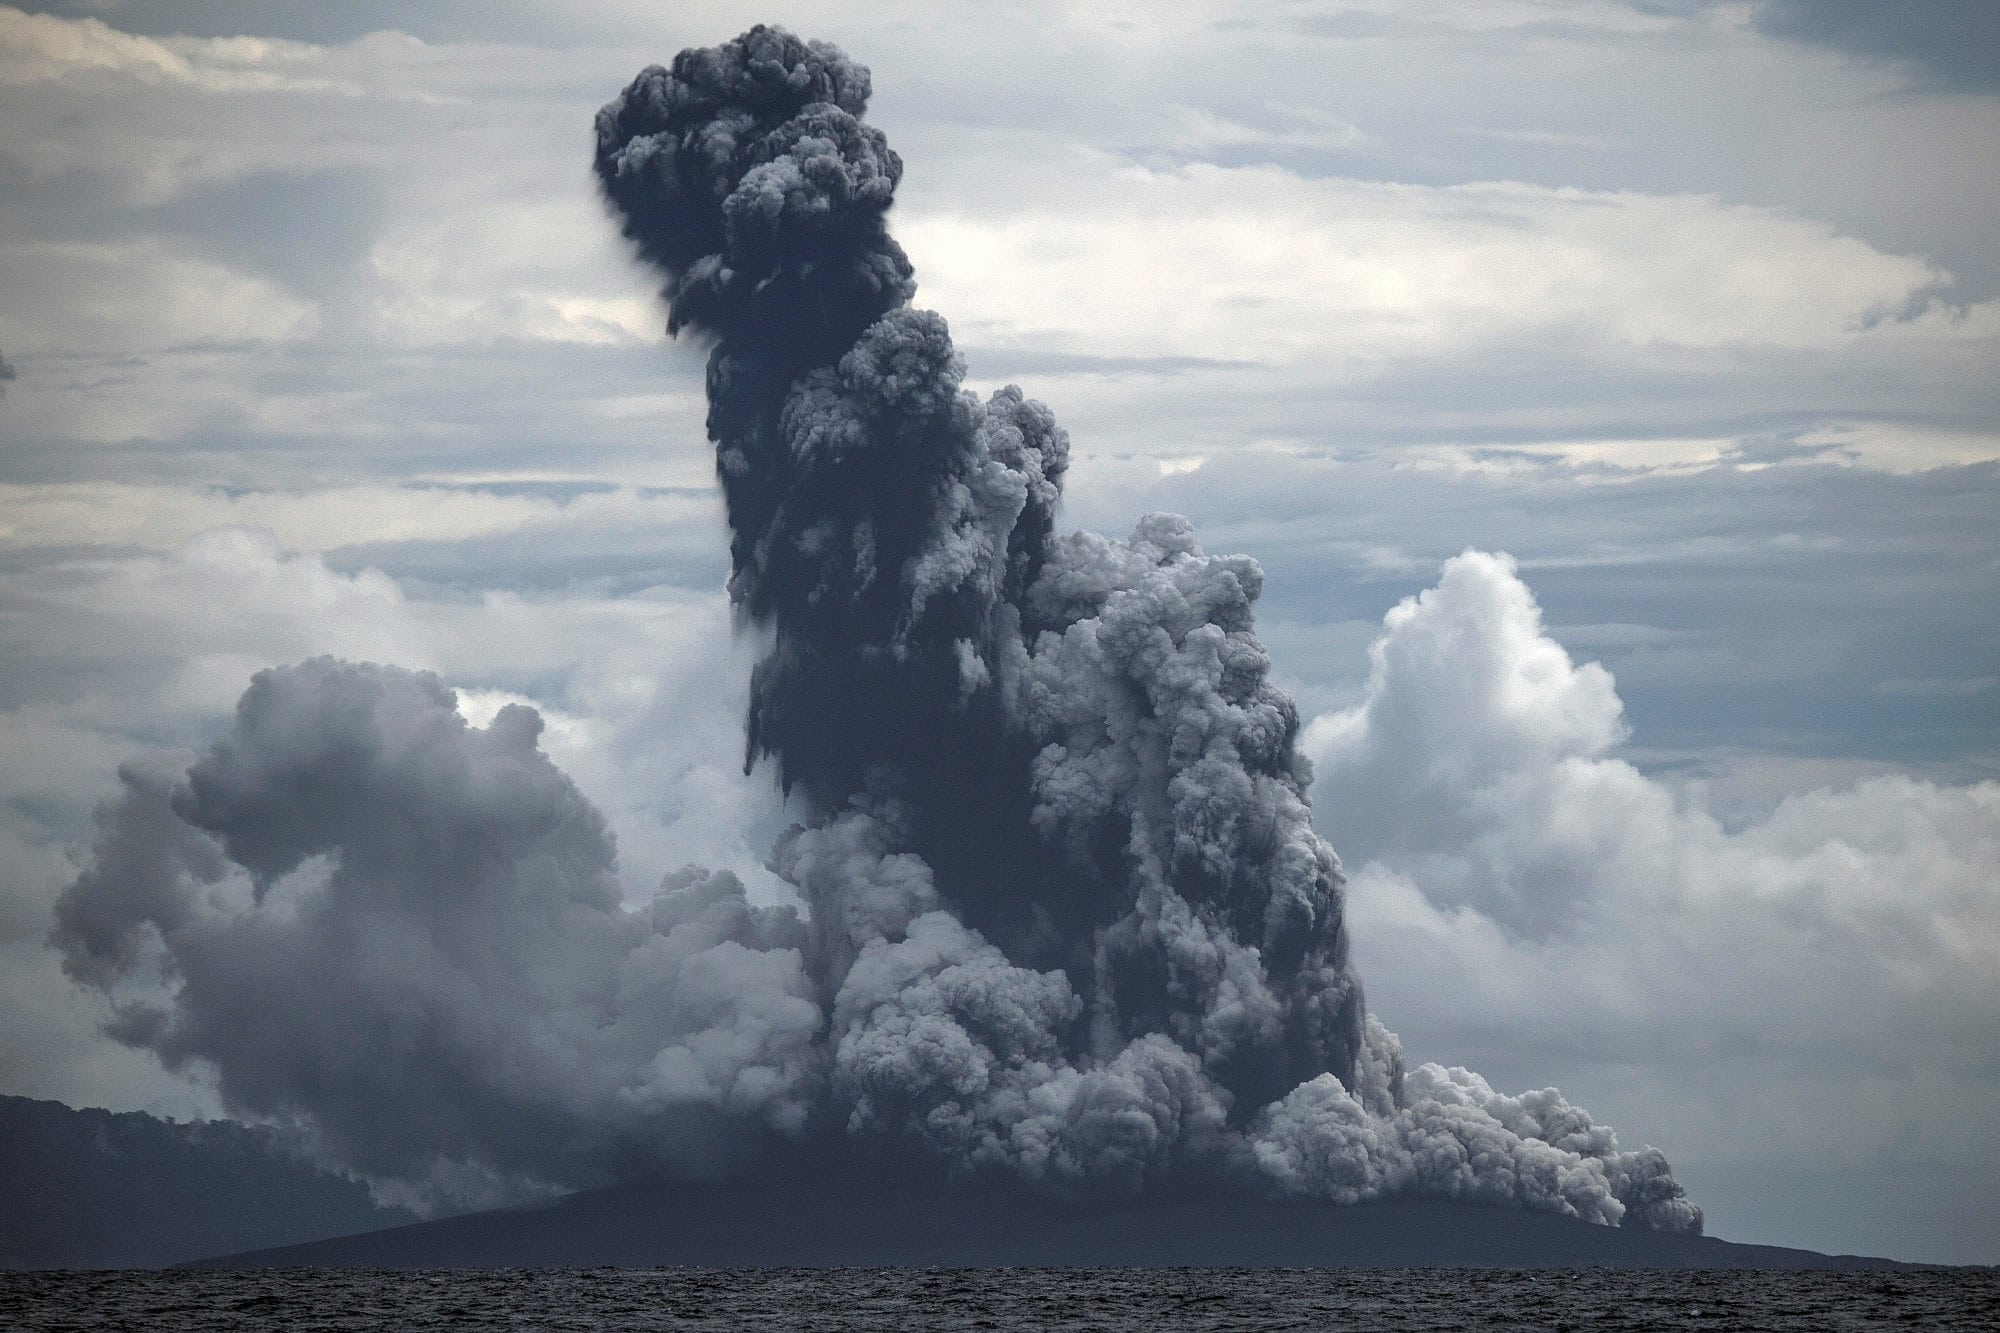  Vulkanausbruch  Krakatau  b  te zwei Drittel seiner H he 